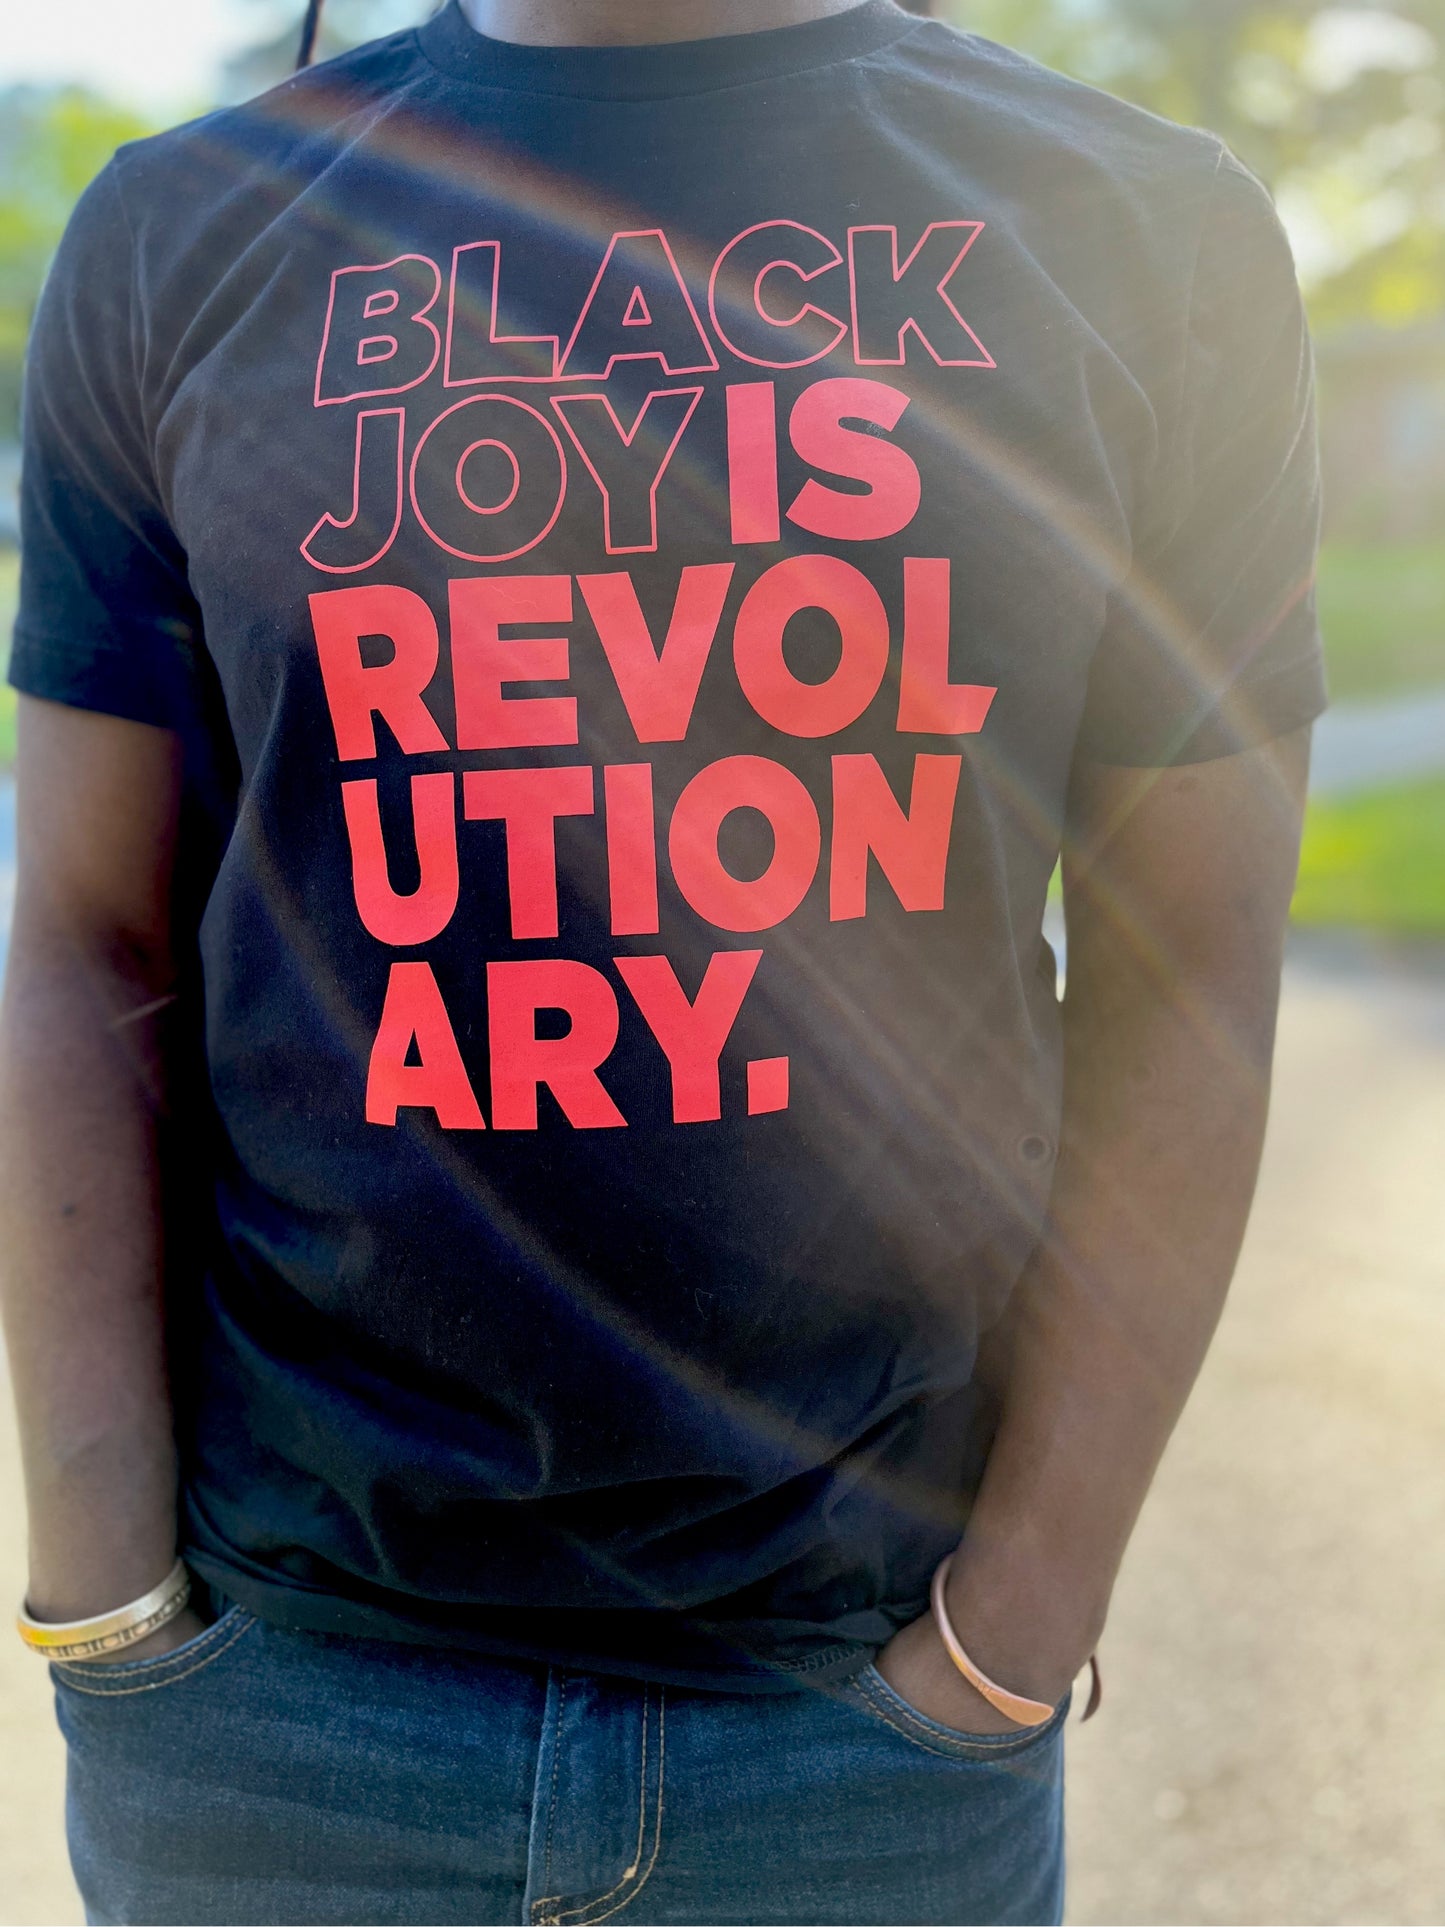 Black Joy Is Revolutionary (TShirt) (Black and Red)